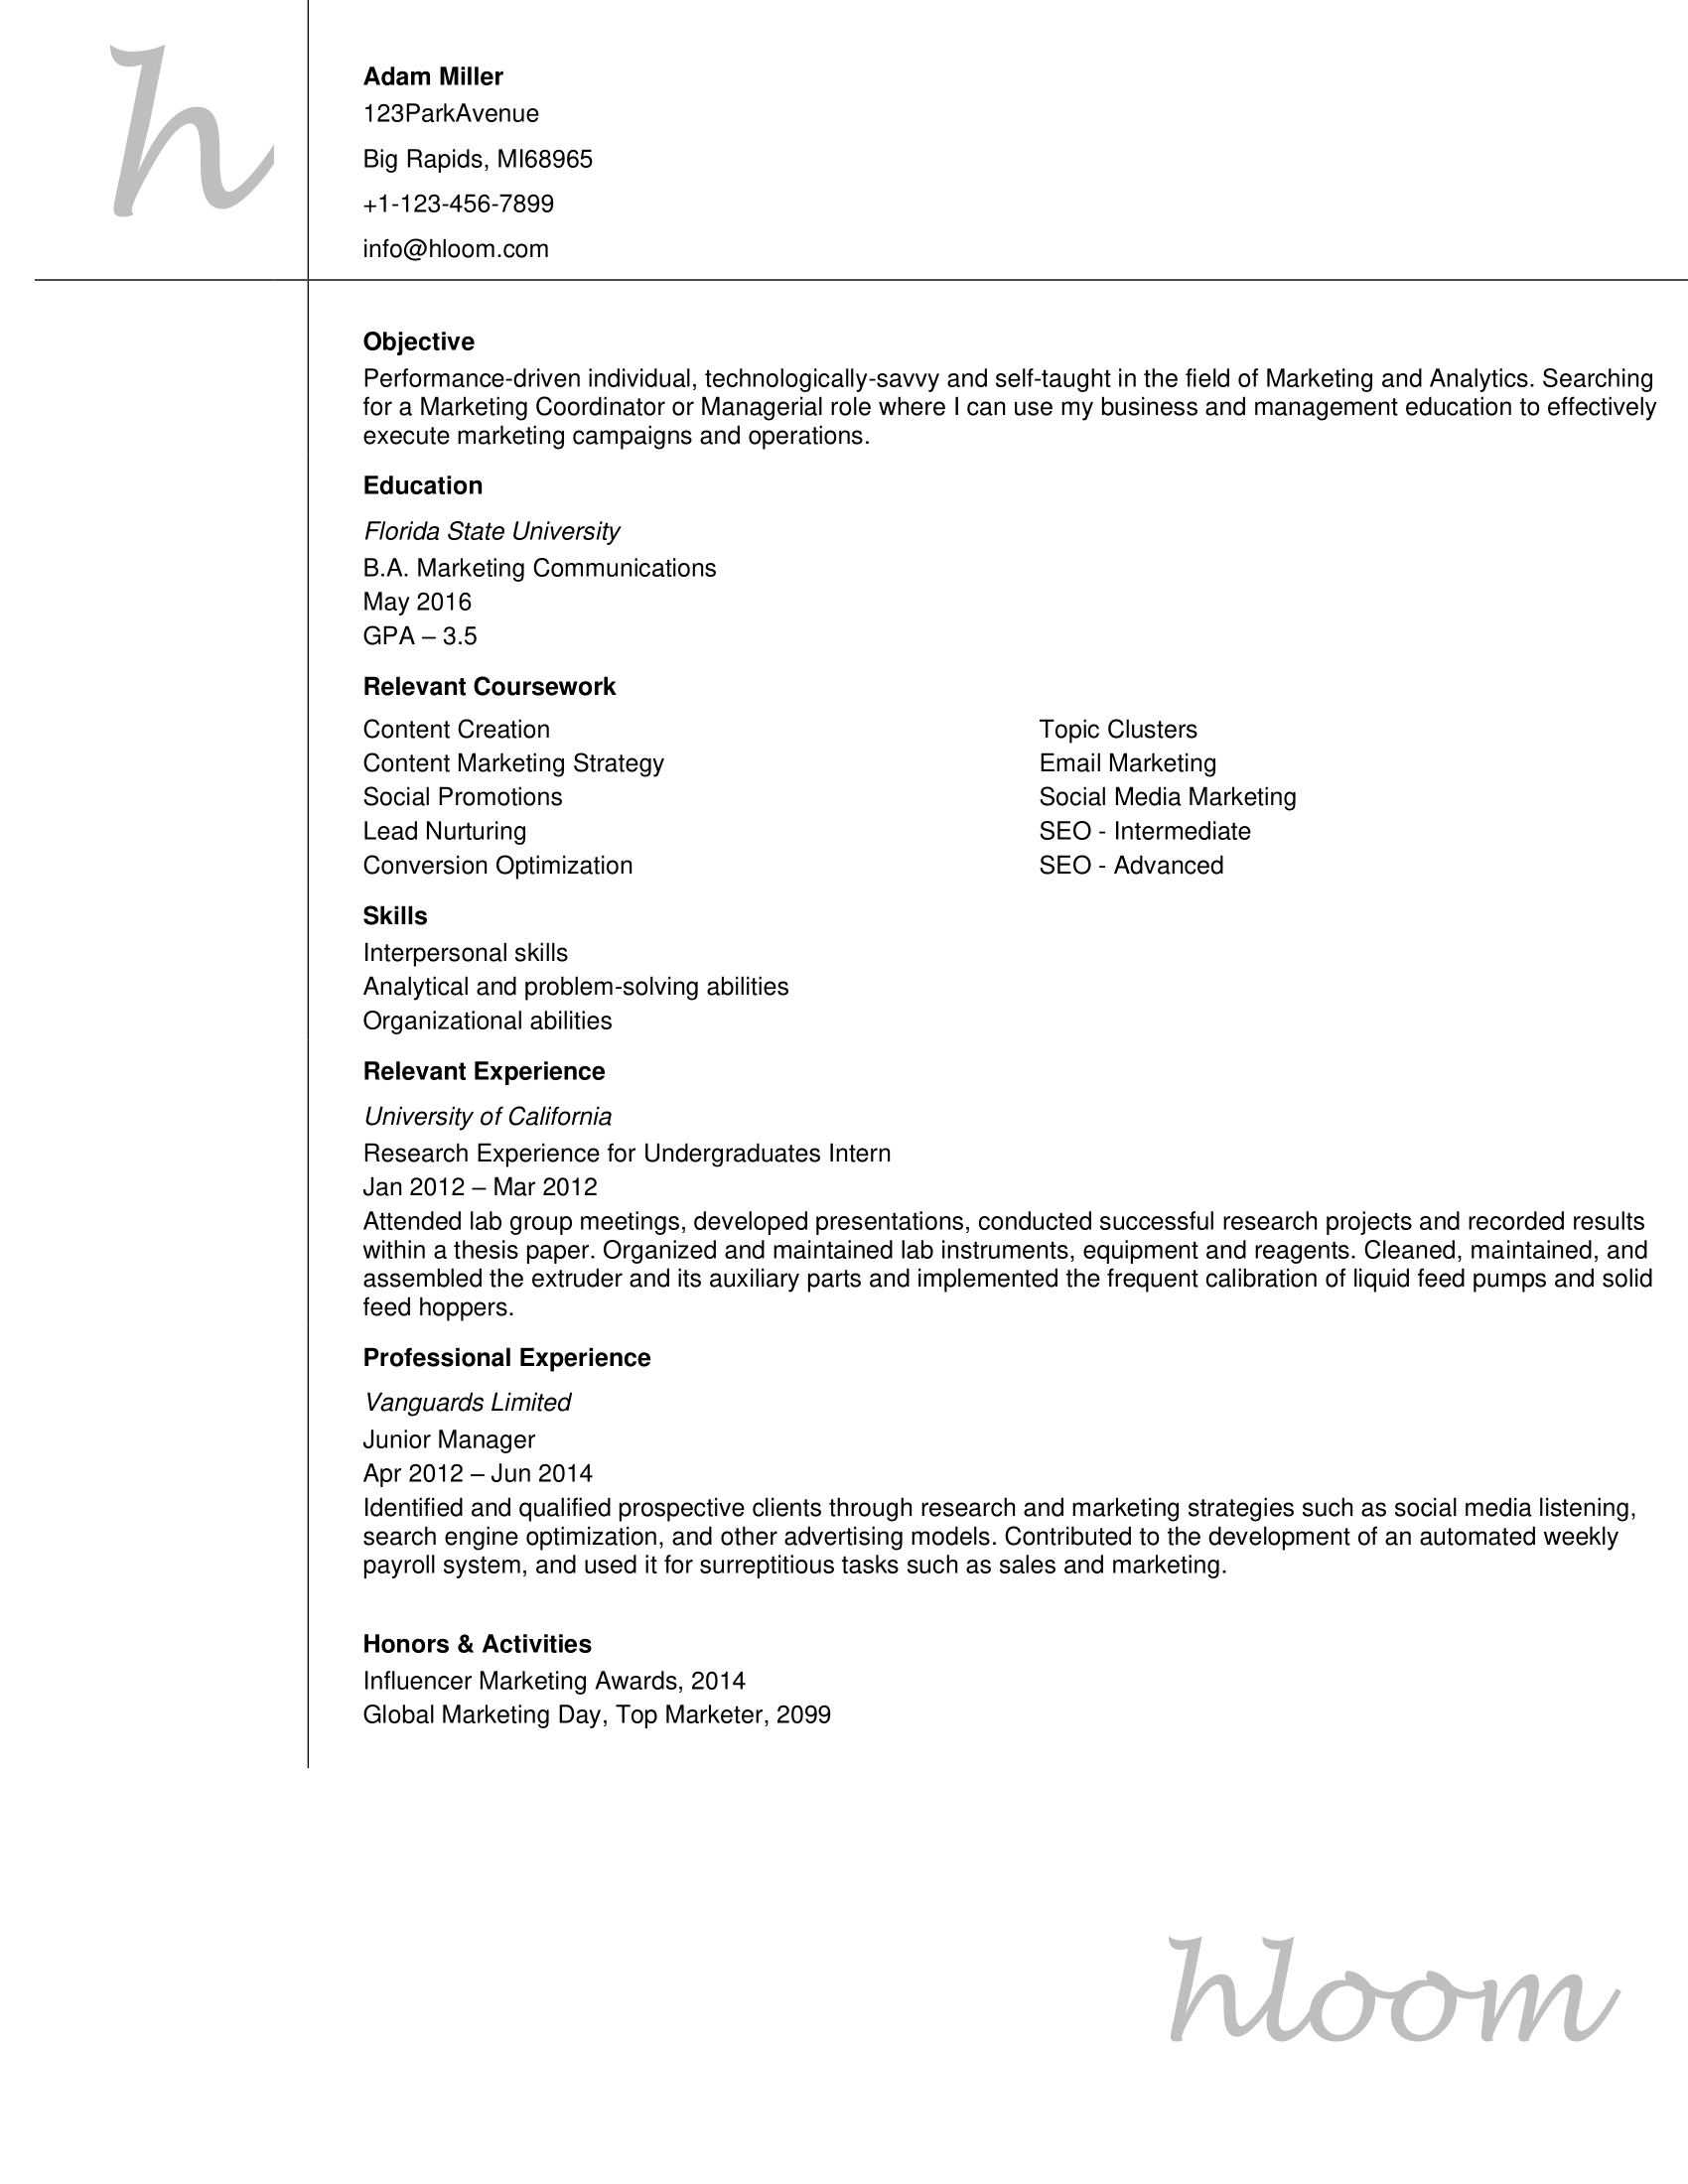 Resume Builder Reddit from www.hloom.com